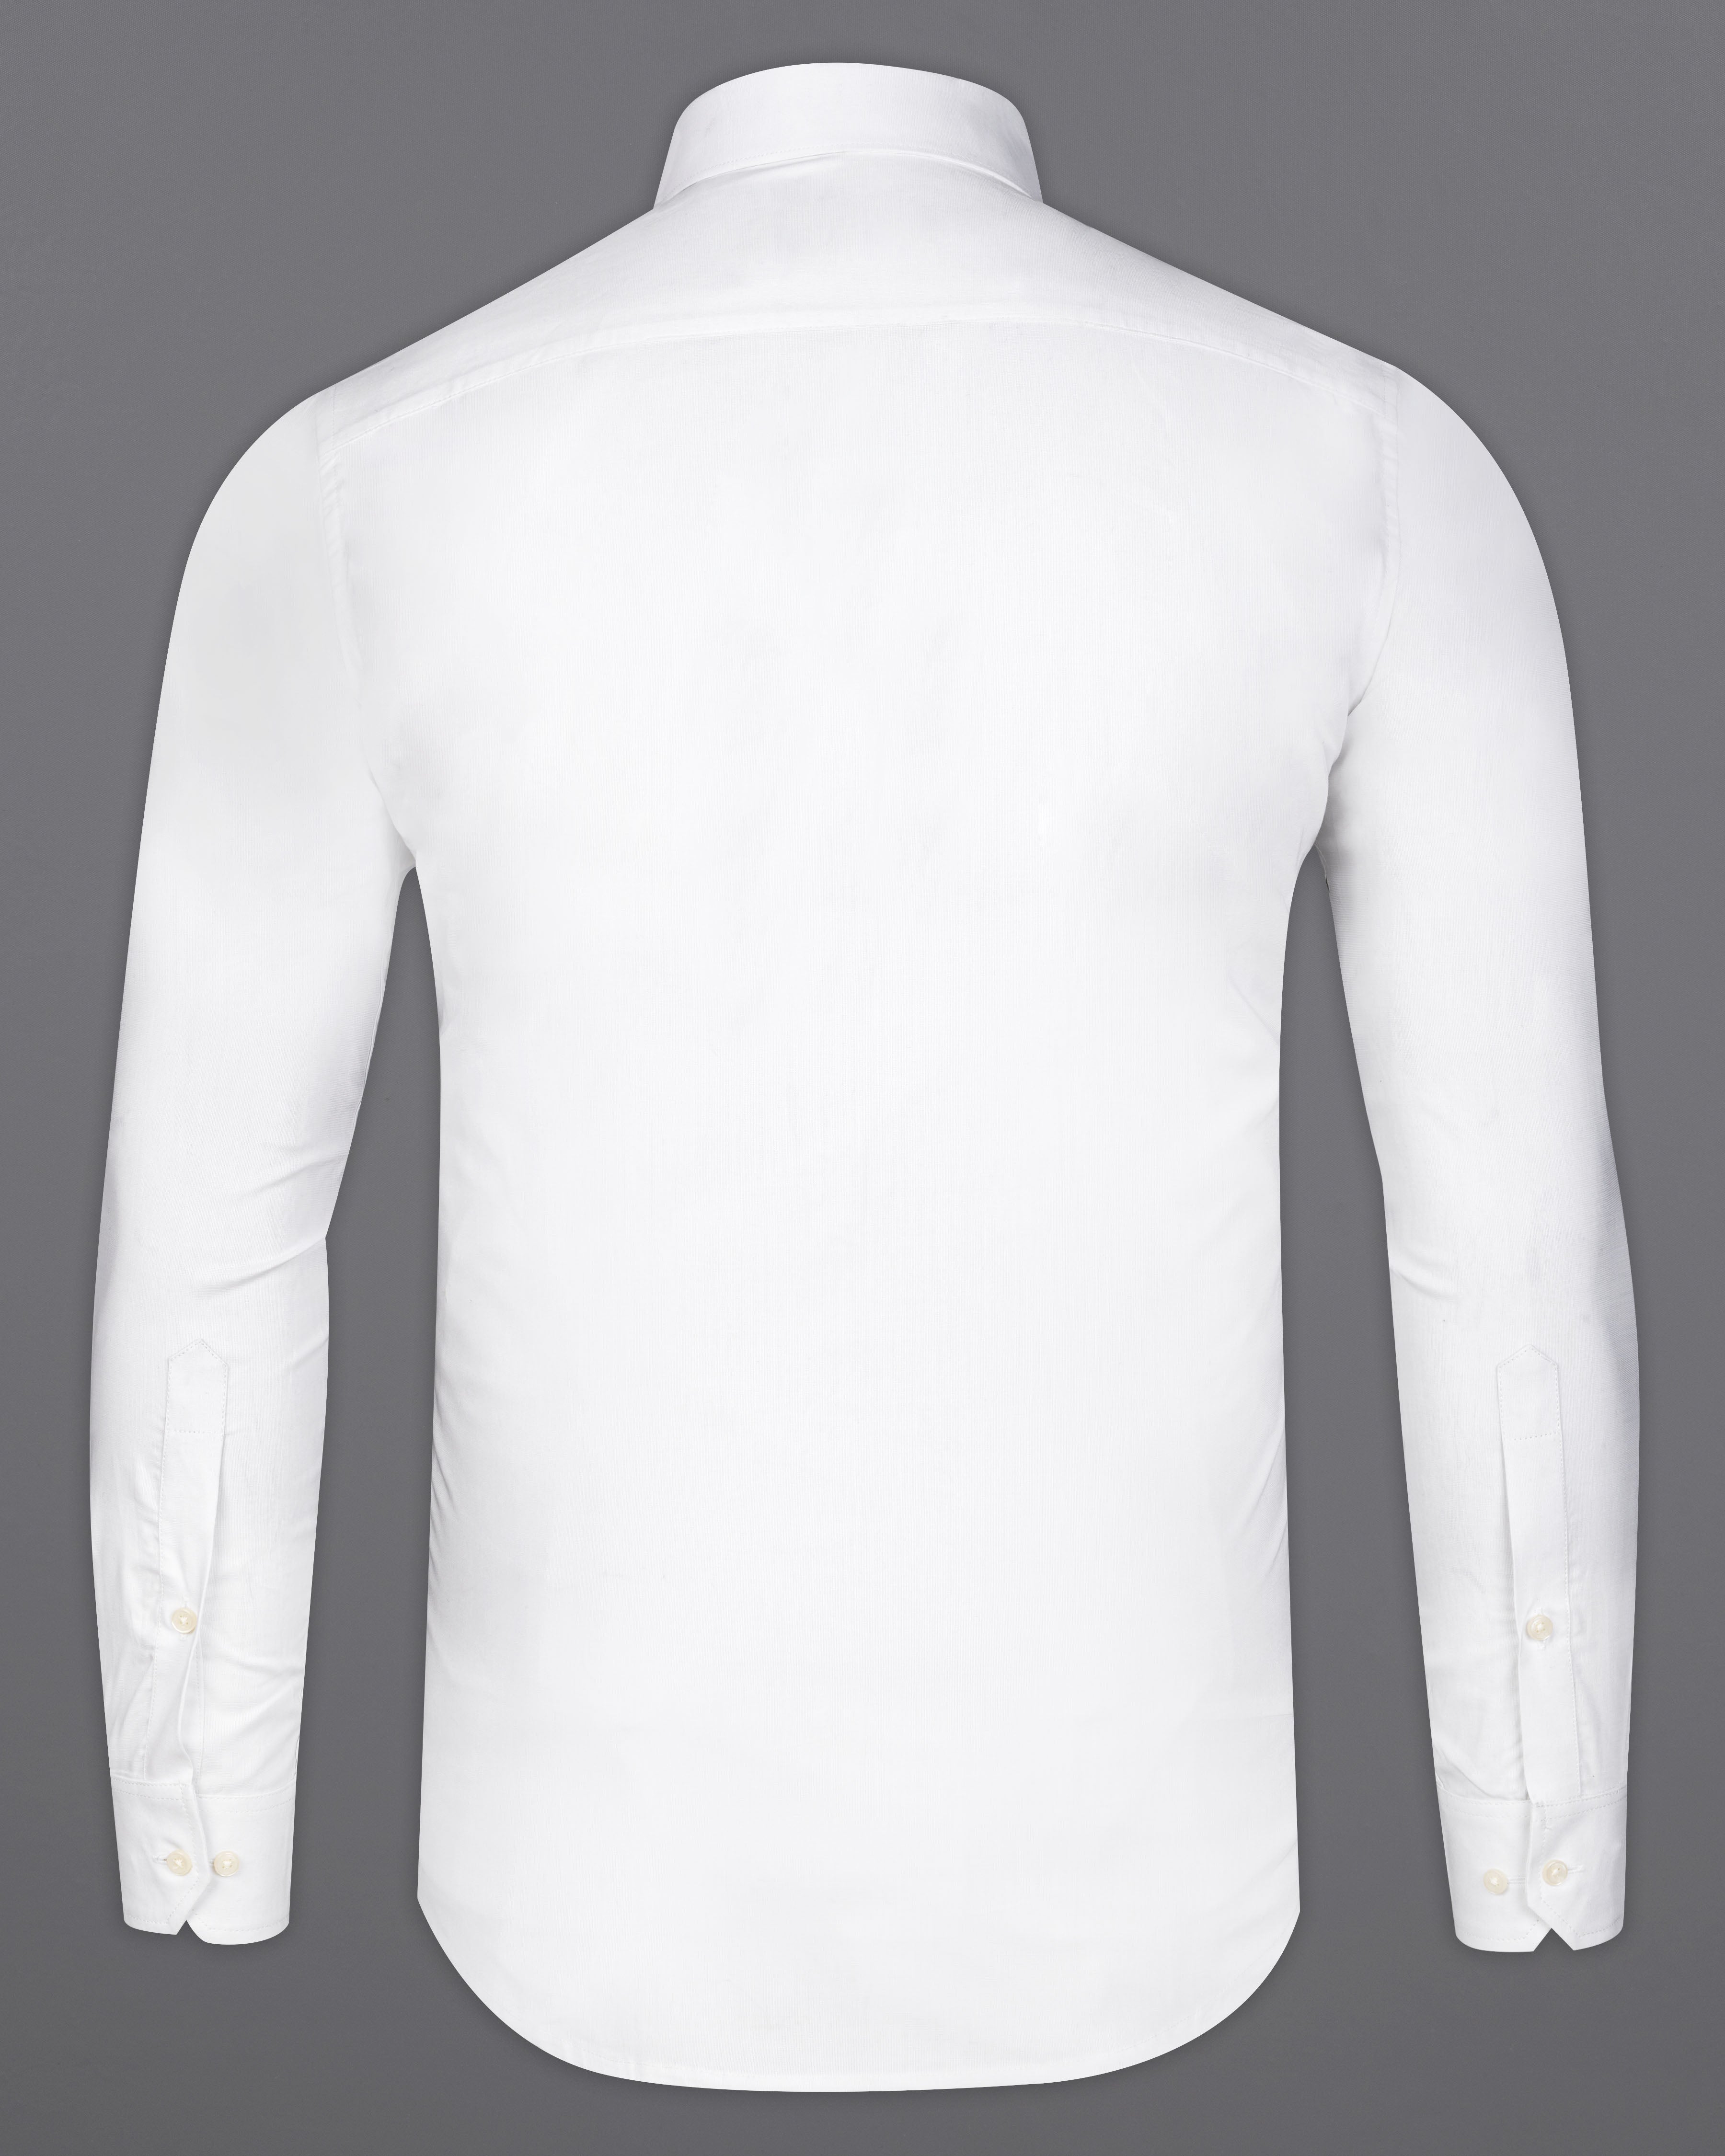 Bright White Luxurious Linen Shirt 9532-38, 9532-H-38, 9532-39, 9532-H-39, 9532-40, 9532-H-40, 9532-42, 9532-H-42, 9532-44, 9532-H-44, 9532-46, 9532-H-46, 9532-48, 9532-H-48, 9532-50, 9532-H-50, 9532-52, 9532-H-52